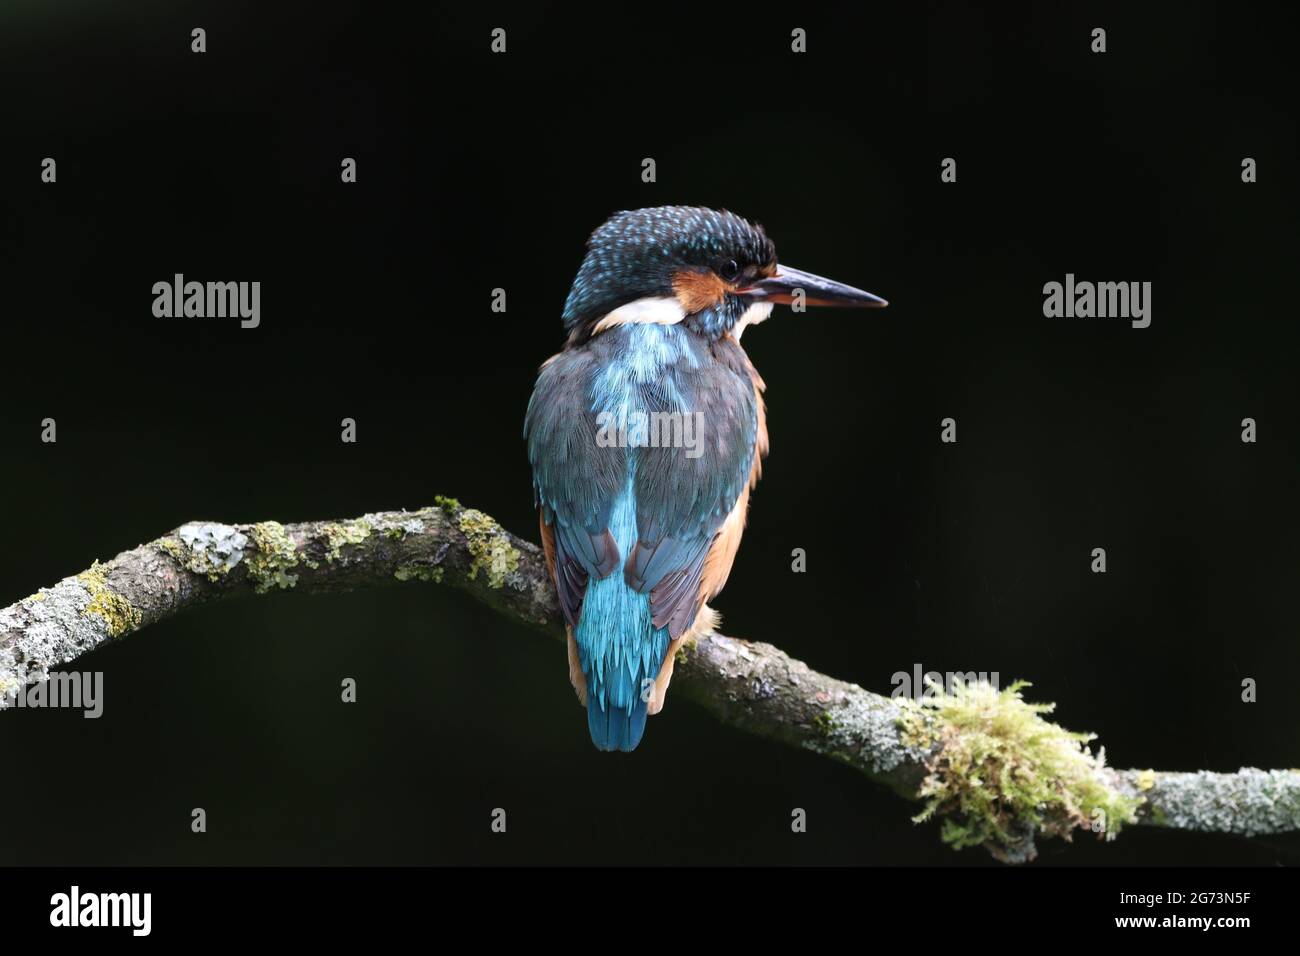 Kingfisher Photography at Shropshire Bird Hide Stock Photo